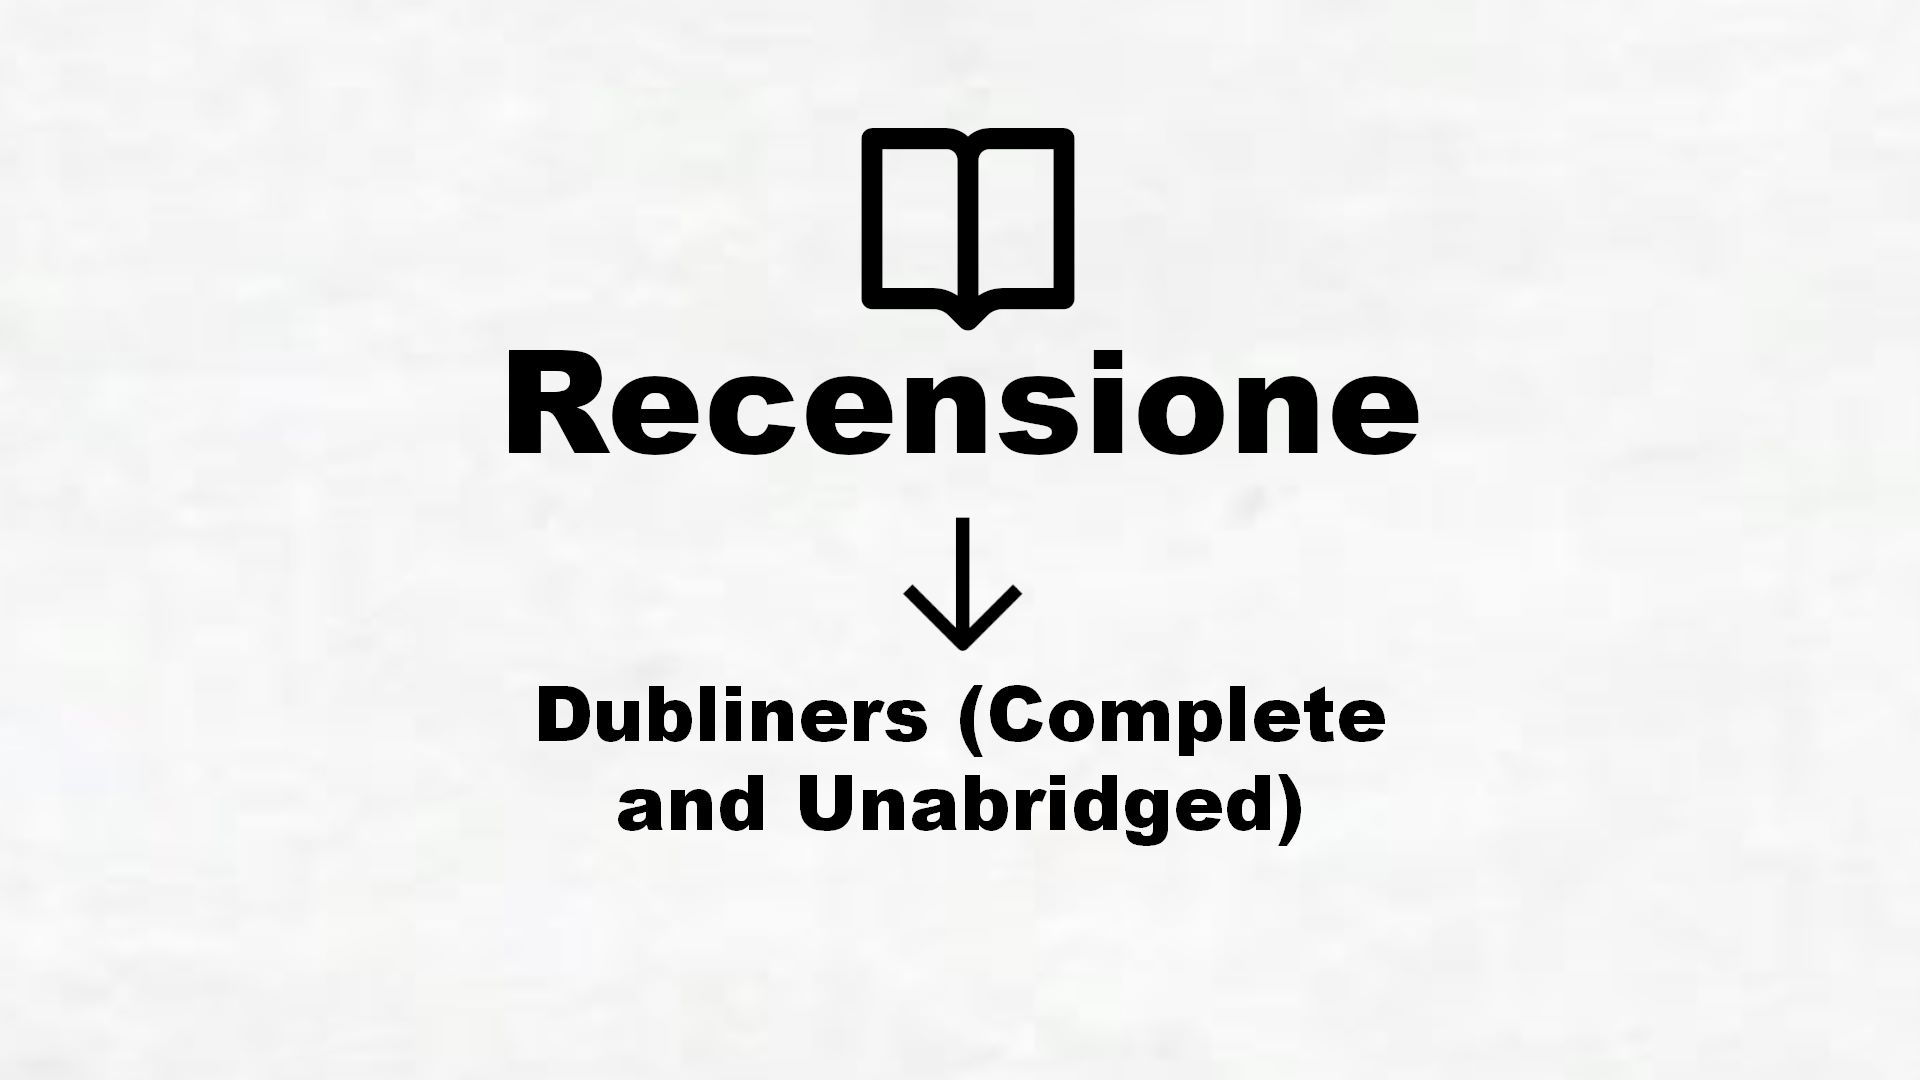 Dubliners (Complete and Unabridged) – Recensione Libro